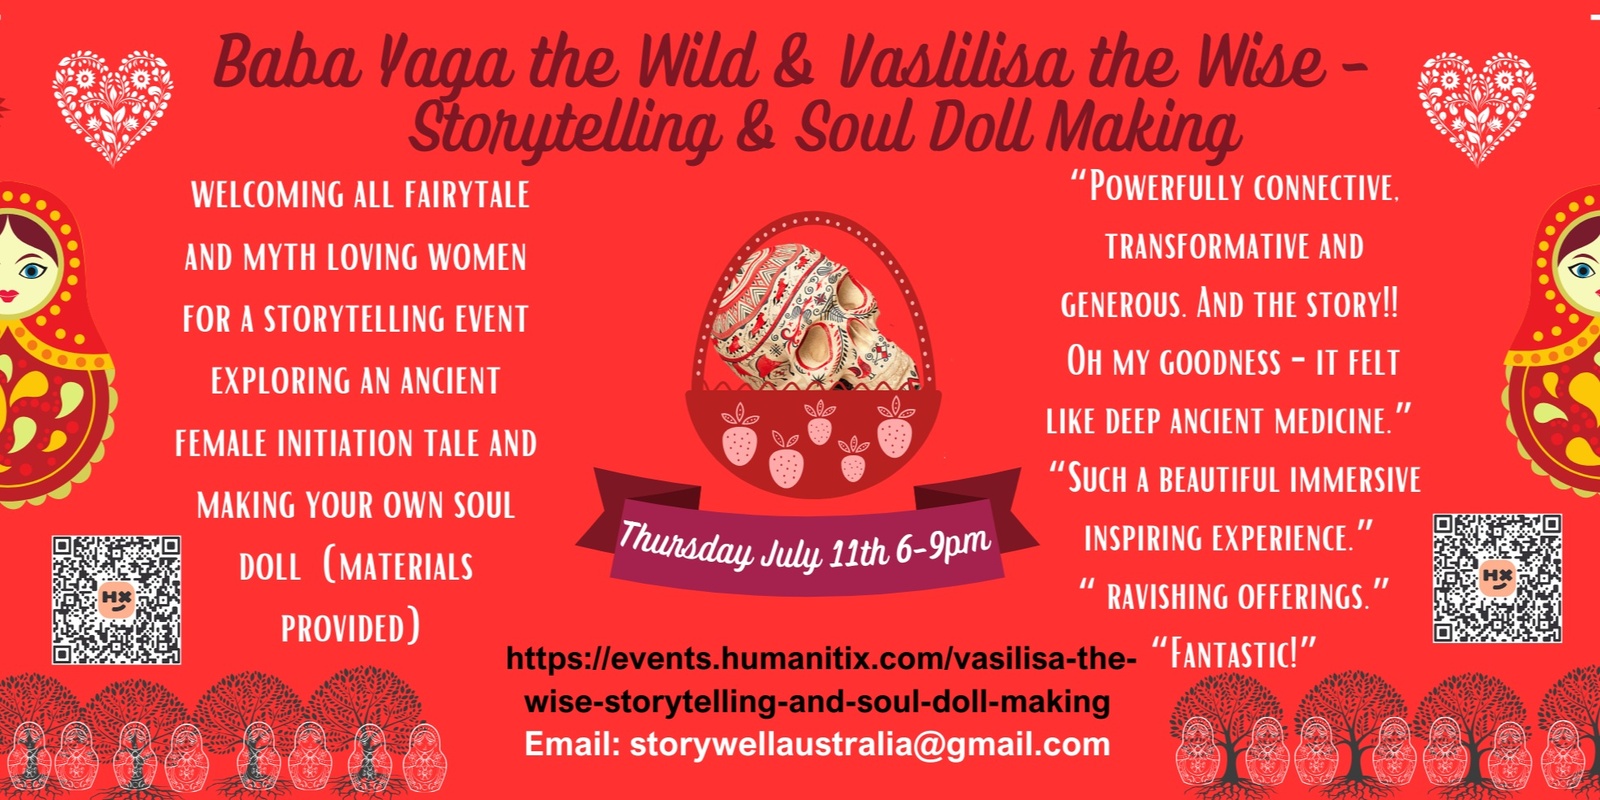 Banner image for Baba Yaga the Wild and Vasilisa the Wise - Storytelling & Soul Doll Making